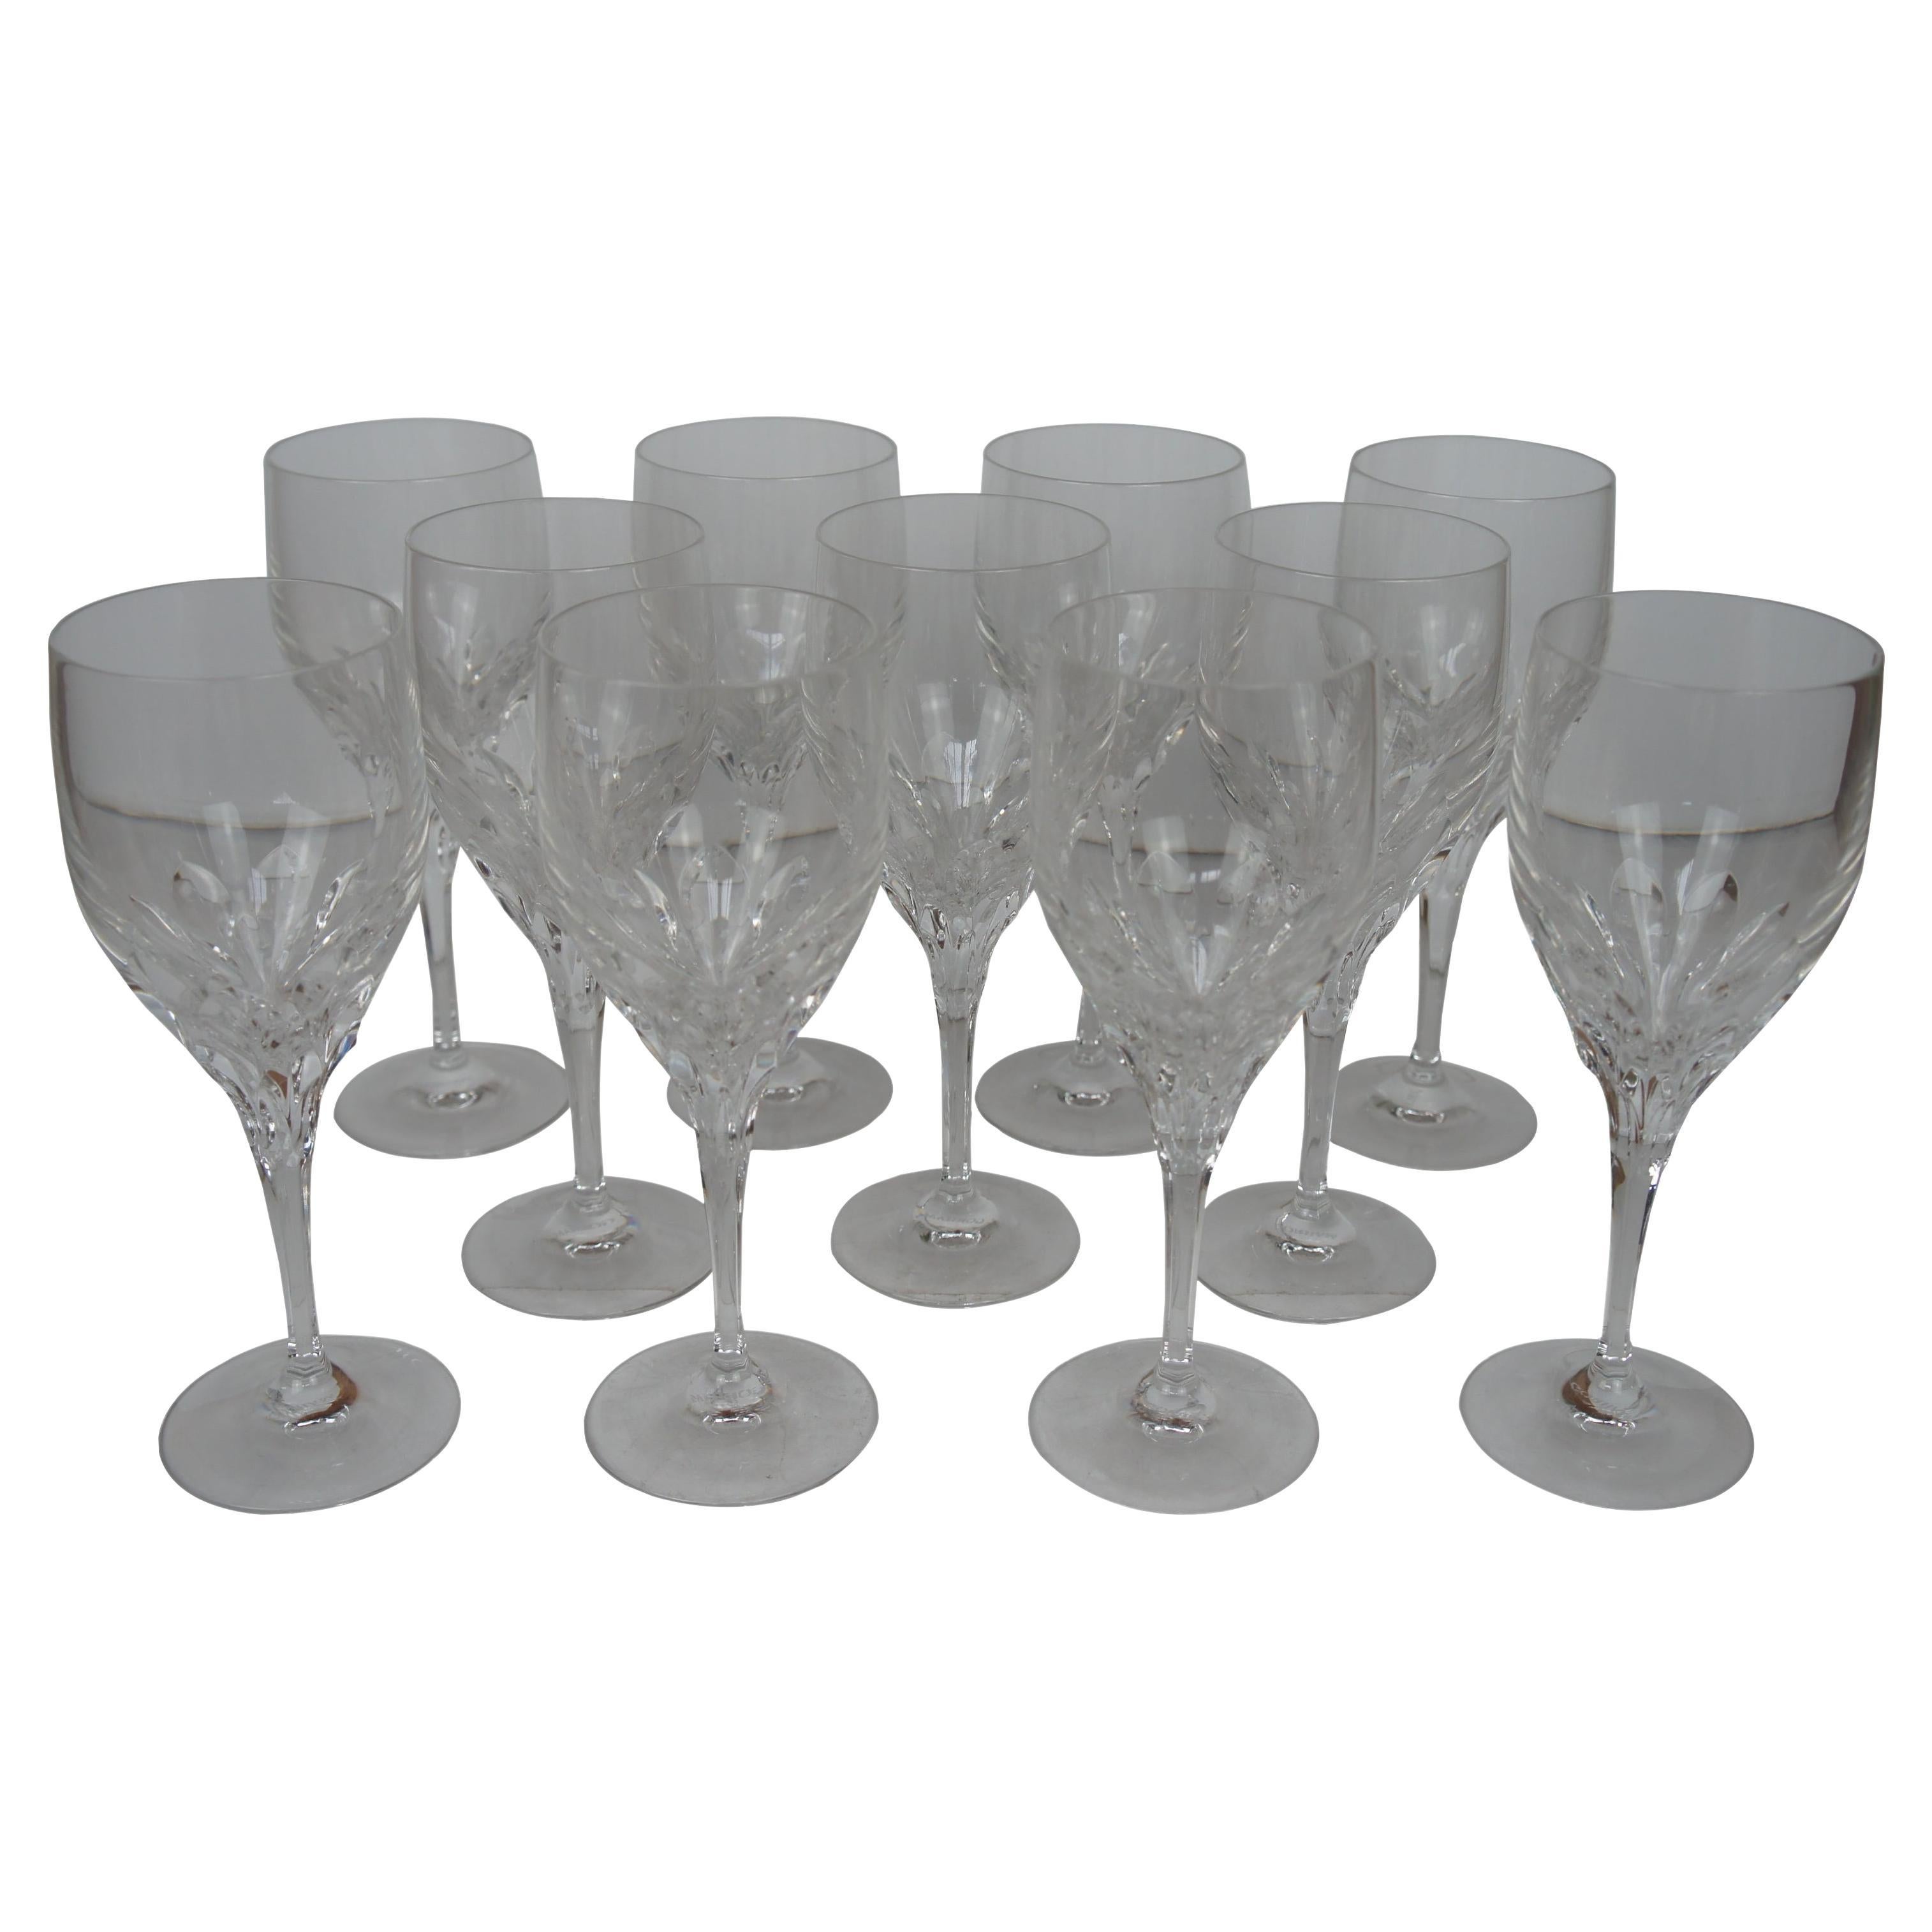 11 Vintage Gorham Cut Crystal Diamond Stemware Wine Water Goblets Glasses